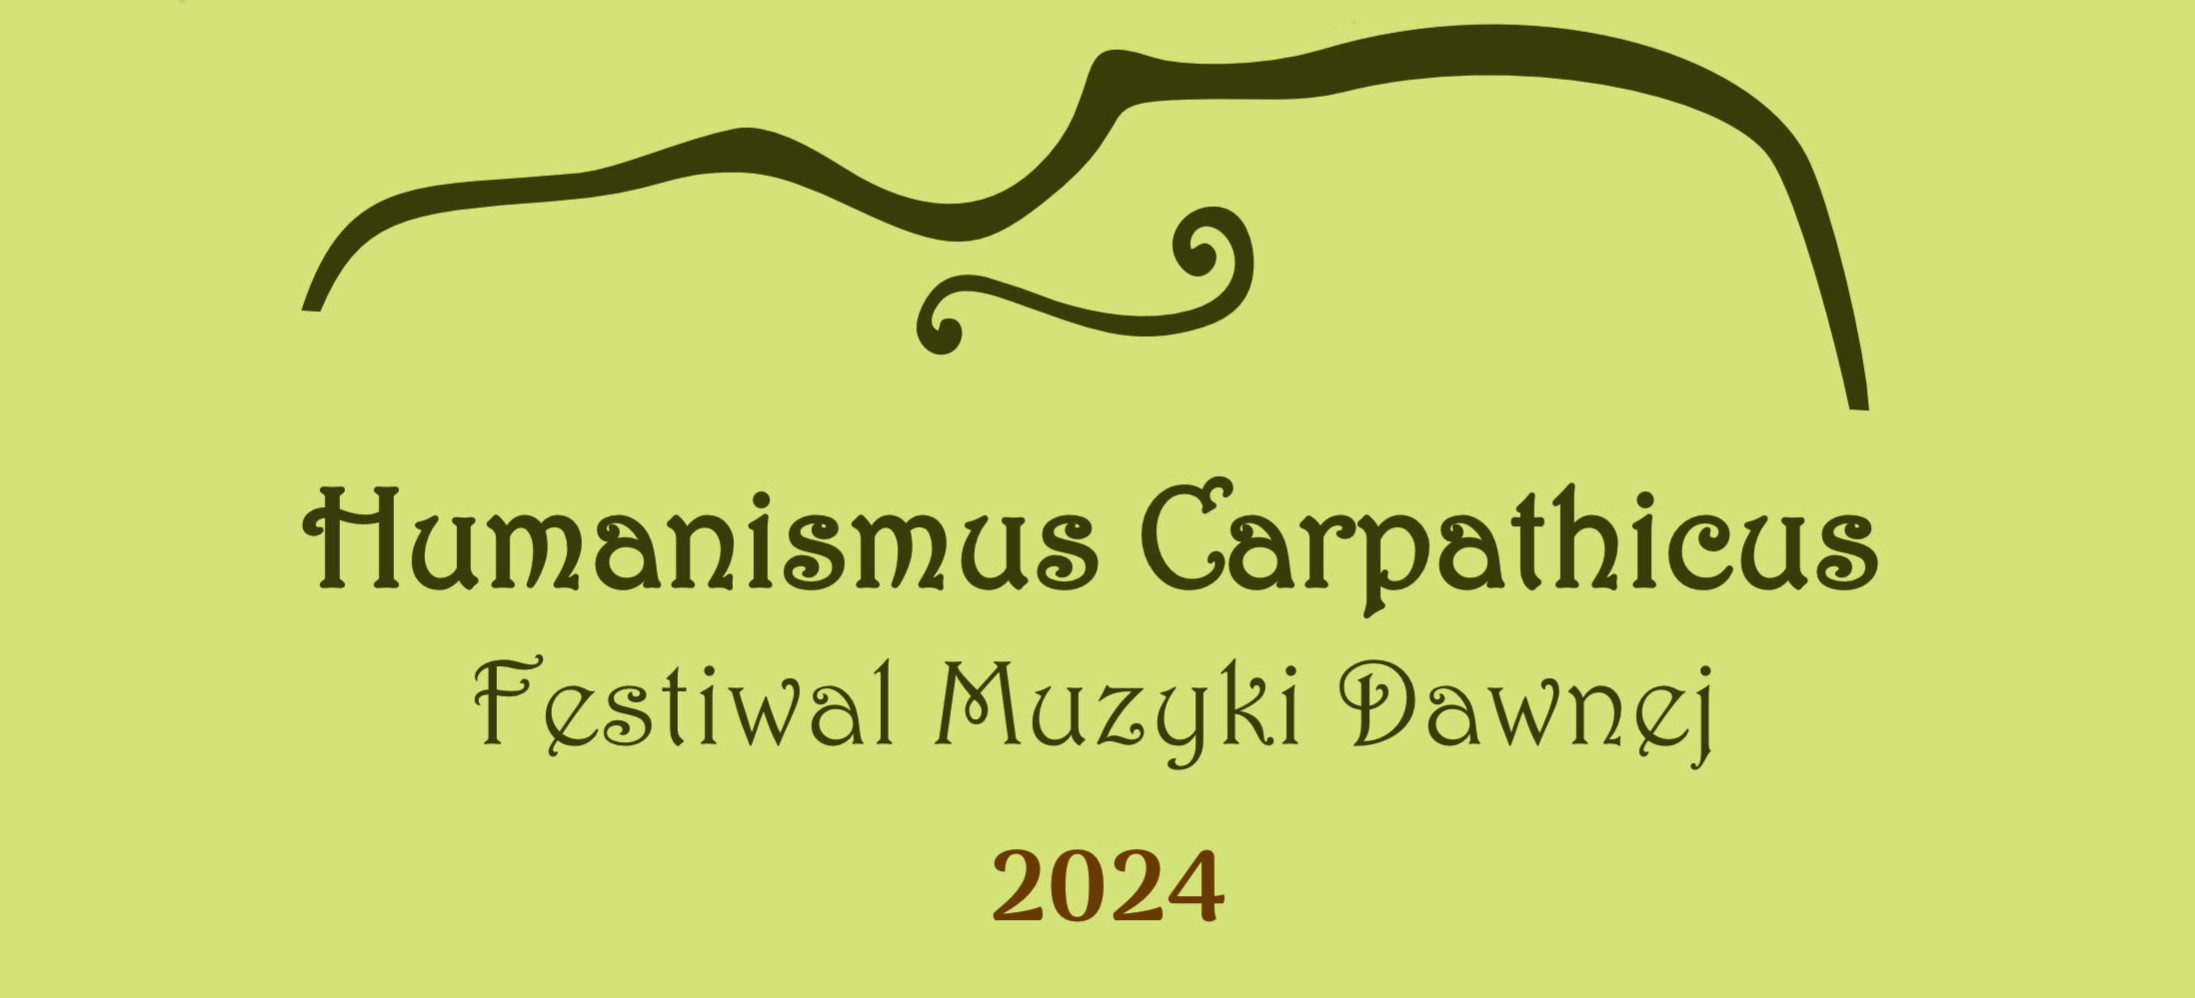 Humanismum Carpathicus – festiwal już jutro!